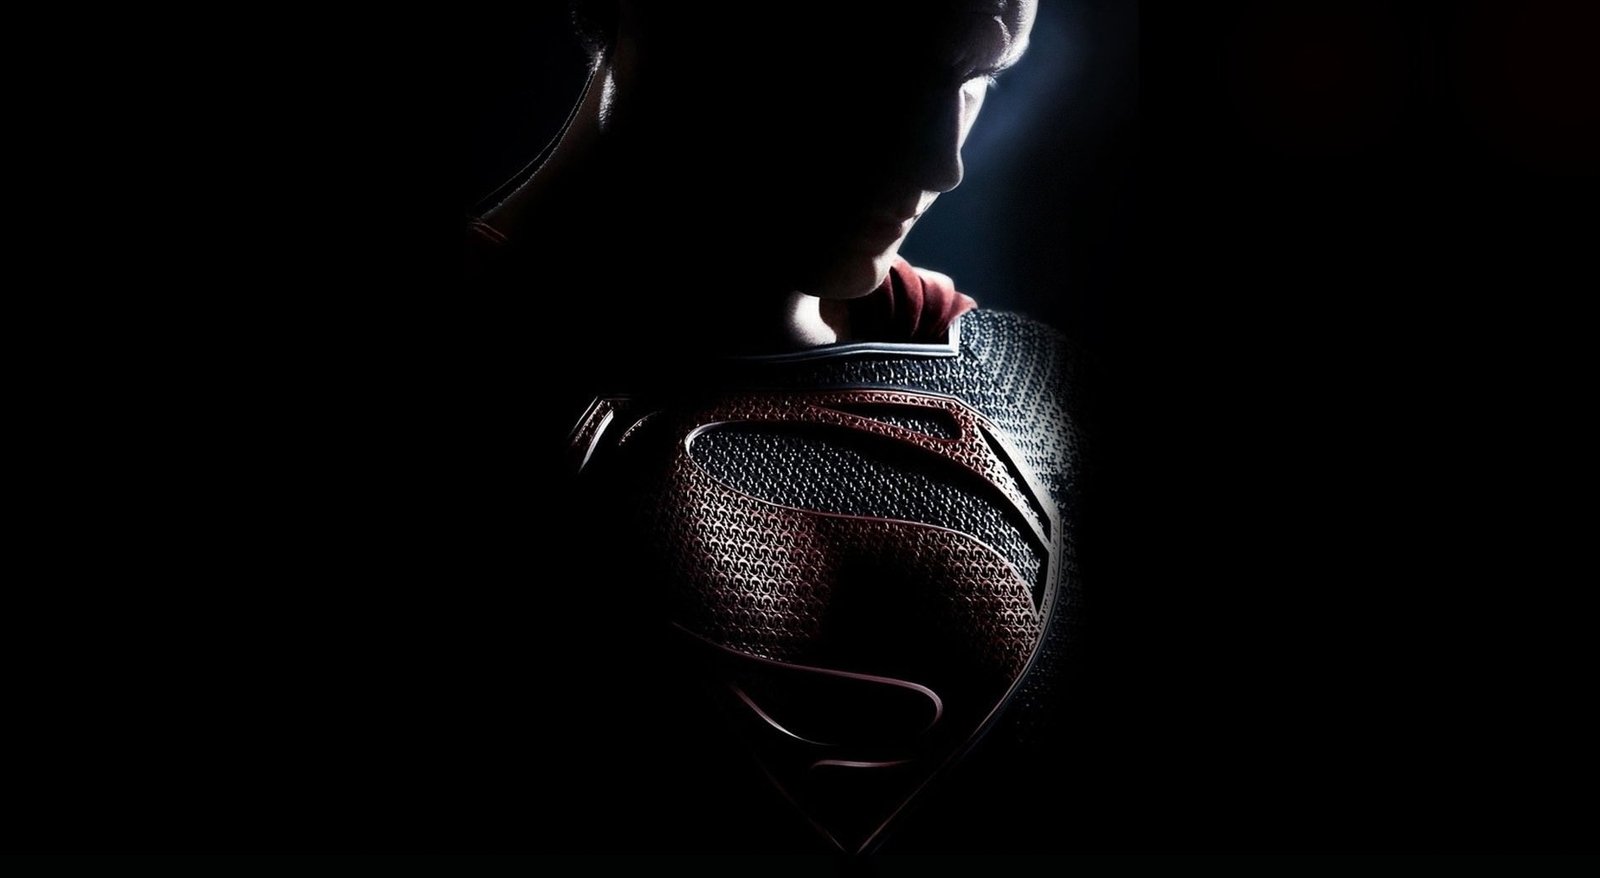 Man Of Steel :- Superman (Credit - DC comics & Warner Bros)